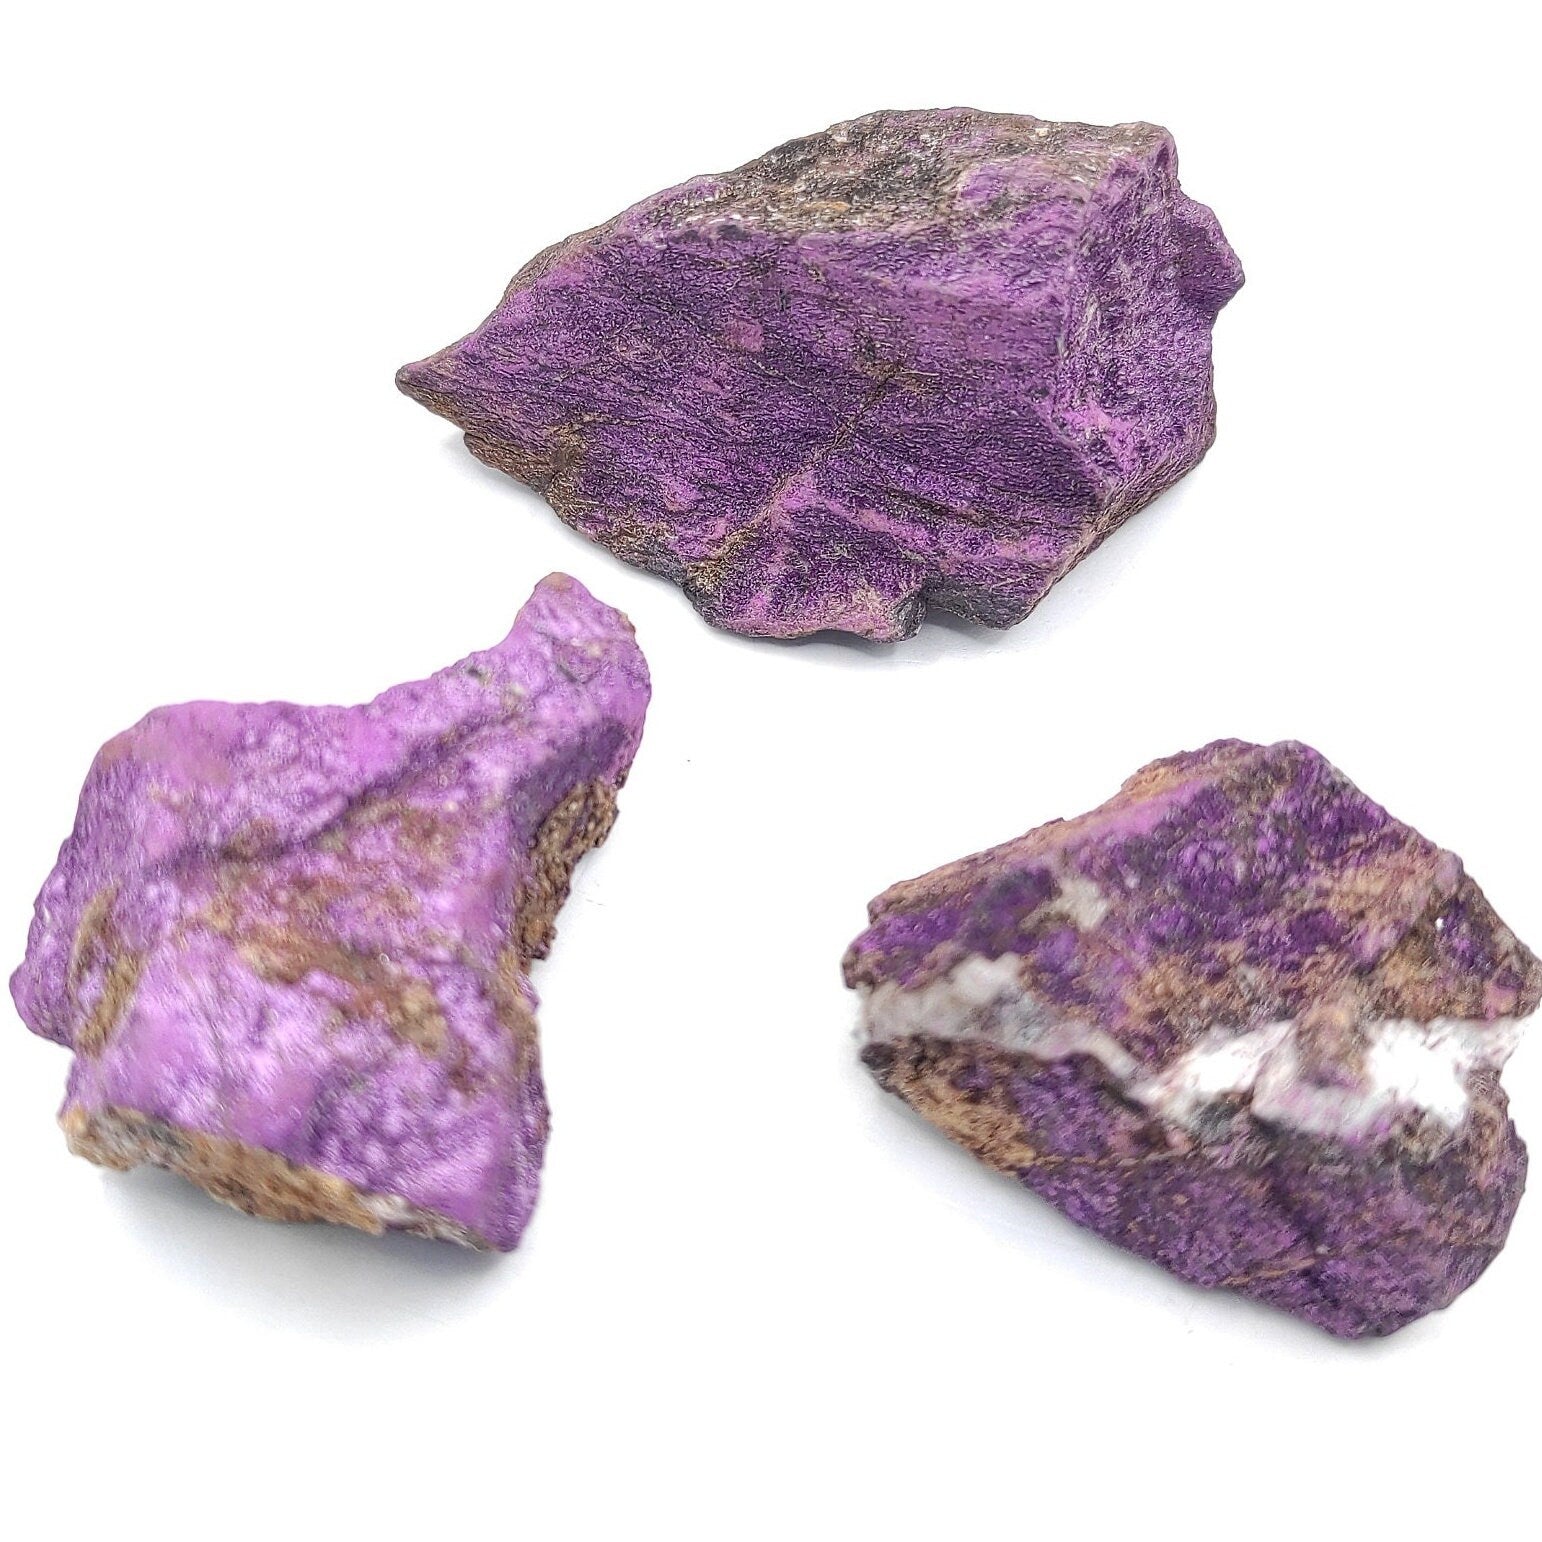 71g (3pcs) Rough Purpurite Lot - Minas Gerais, Brazil - Purpurite Minerals - Natural Purpurite Crystal Lot - Raw Purpurite Crystals